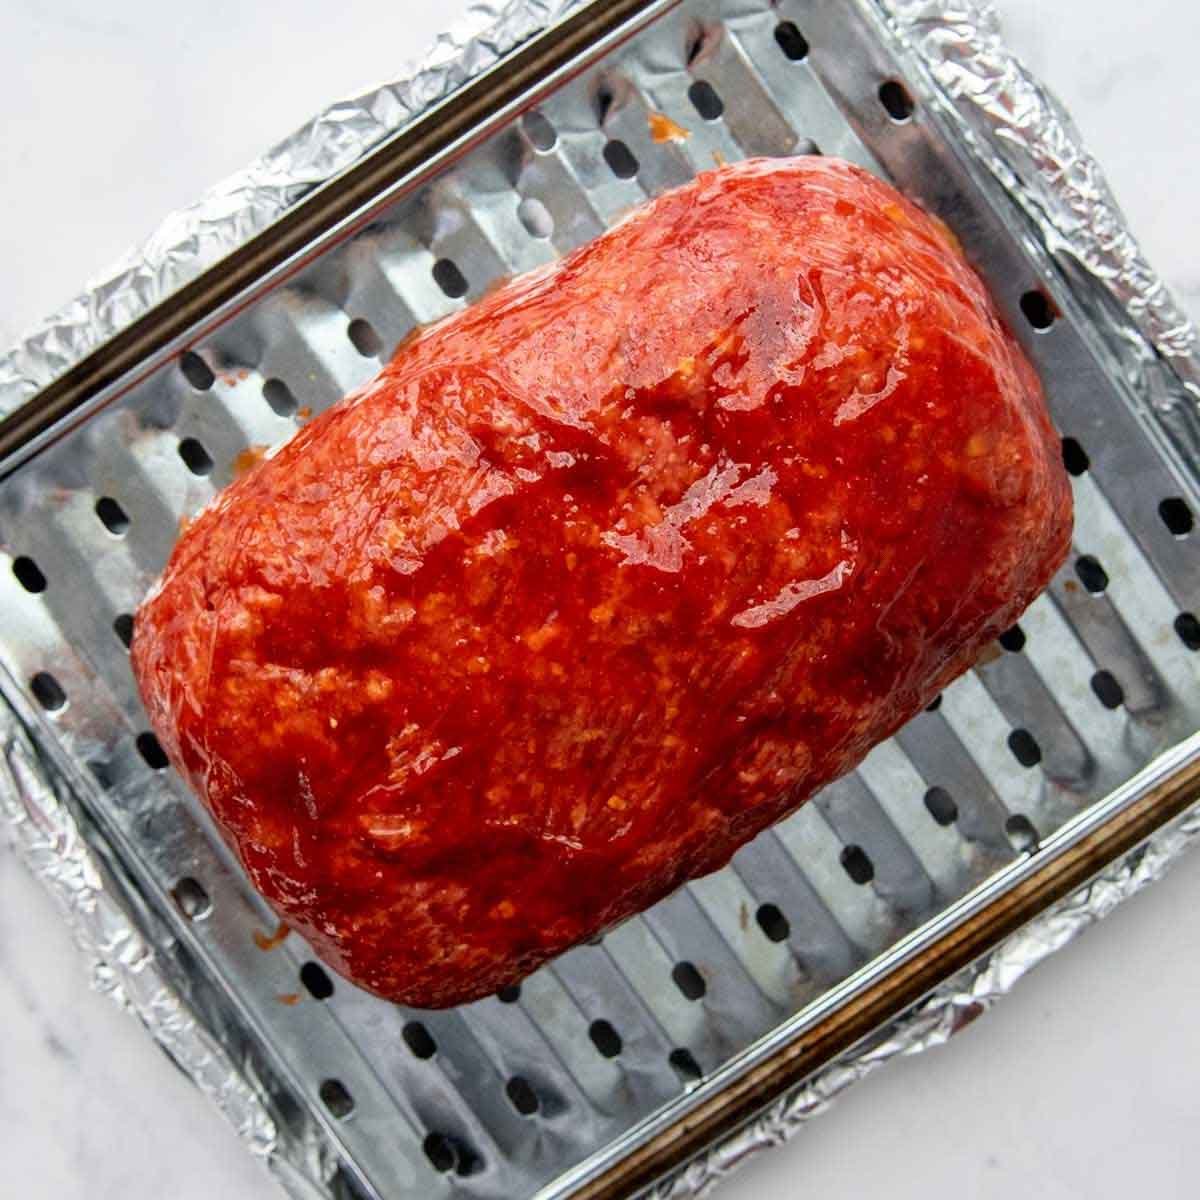 glaze over the meatloaf before being baked.